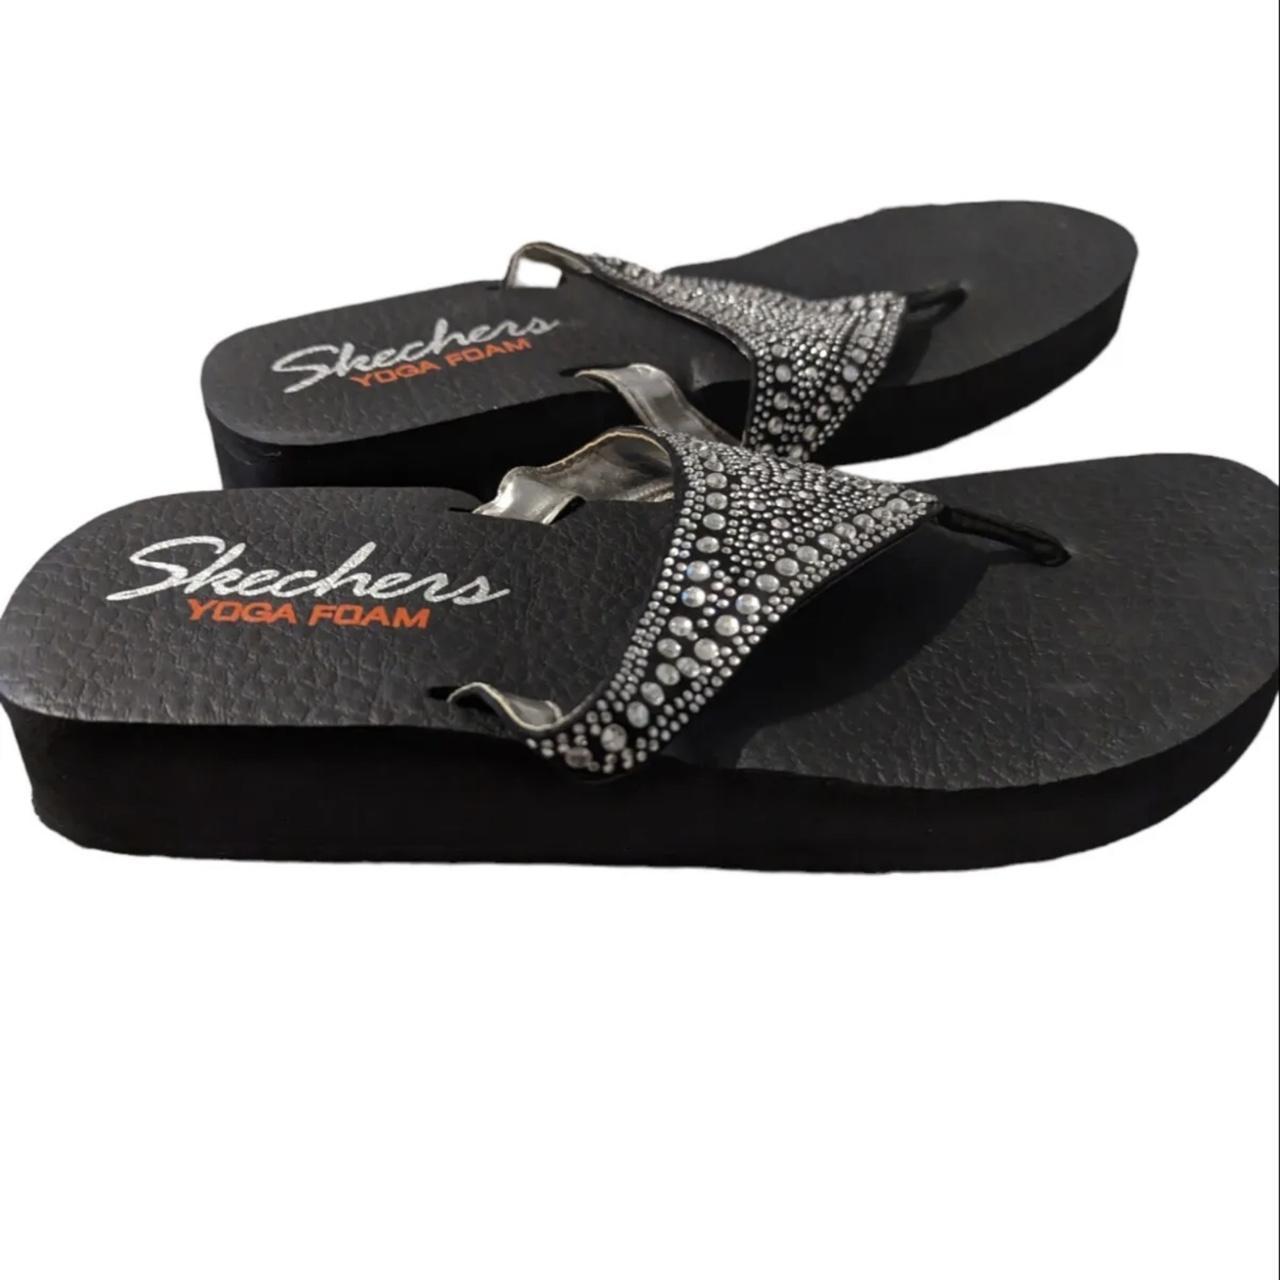 Skechers Yoga Foam Sandals Black Size 9 - $11 (72% Off Retail) New